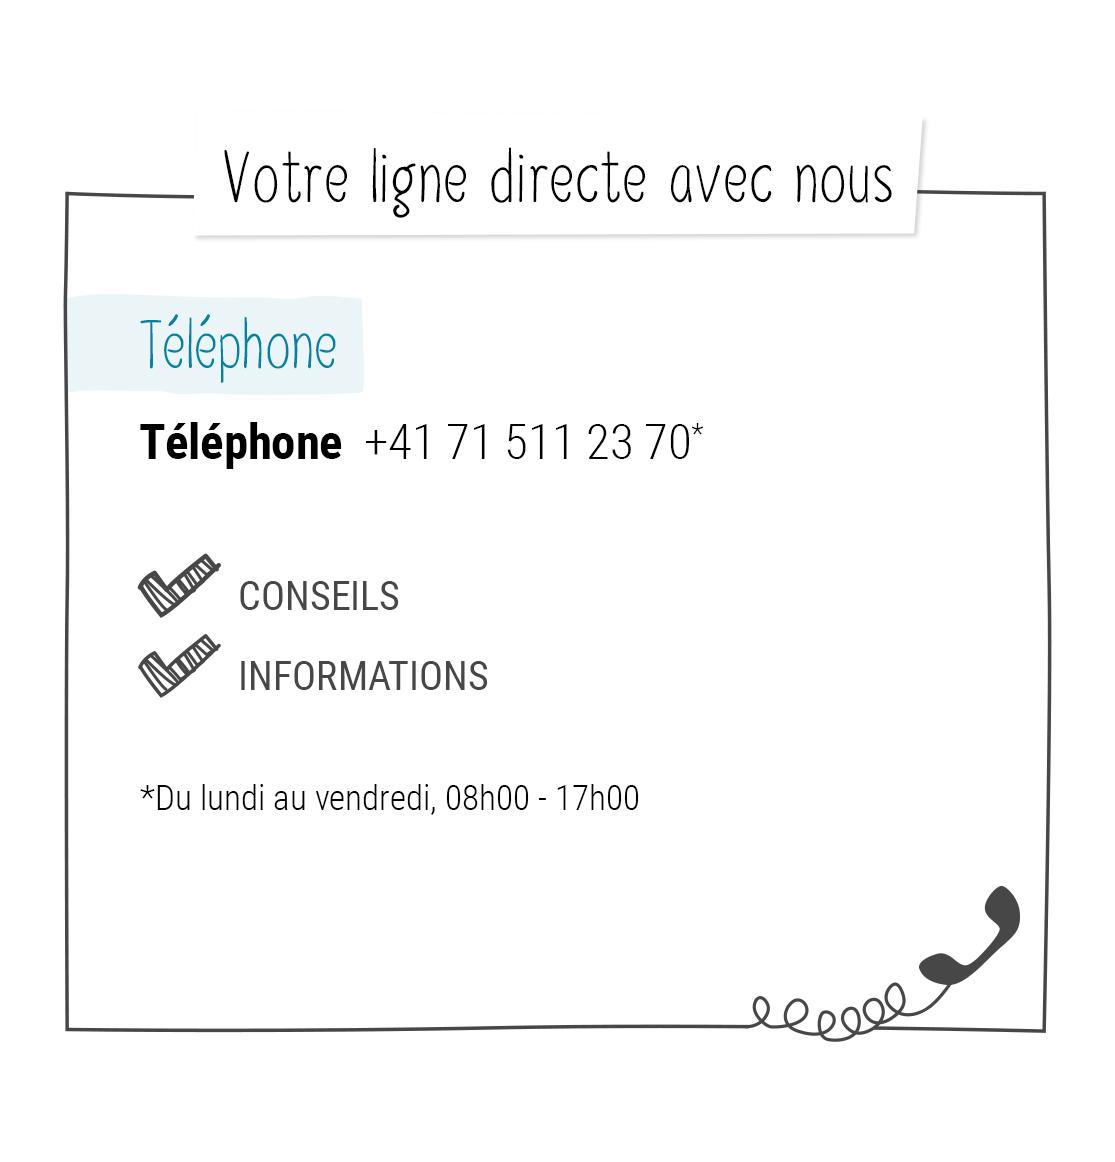 Kontaktseite_Telefon-Fax